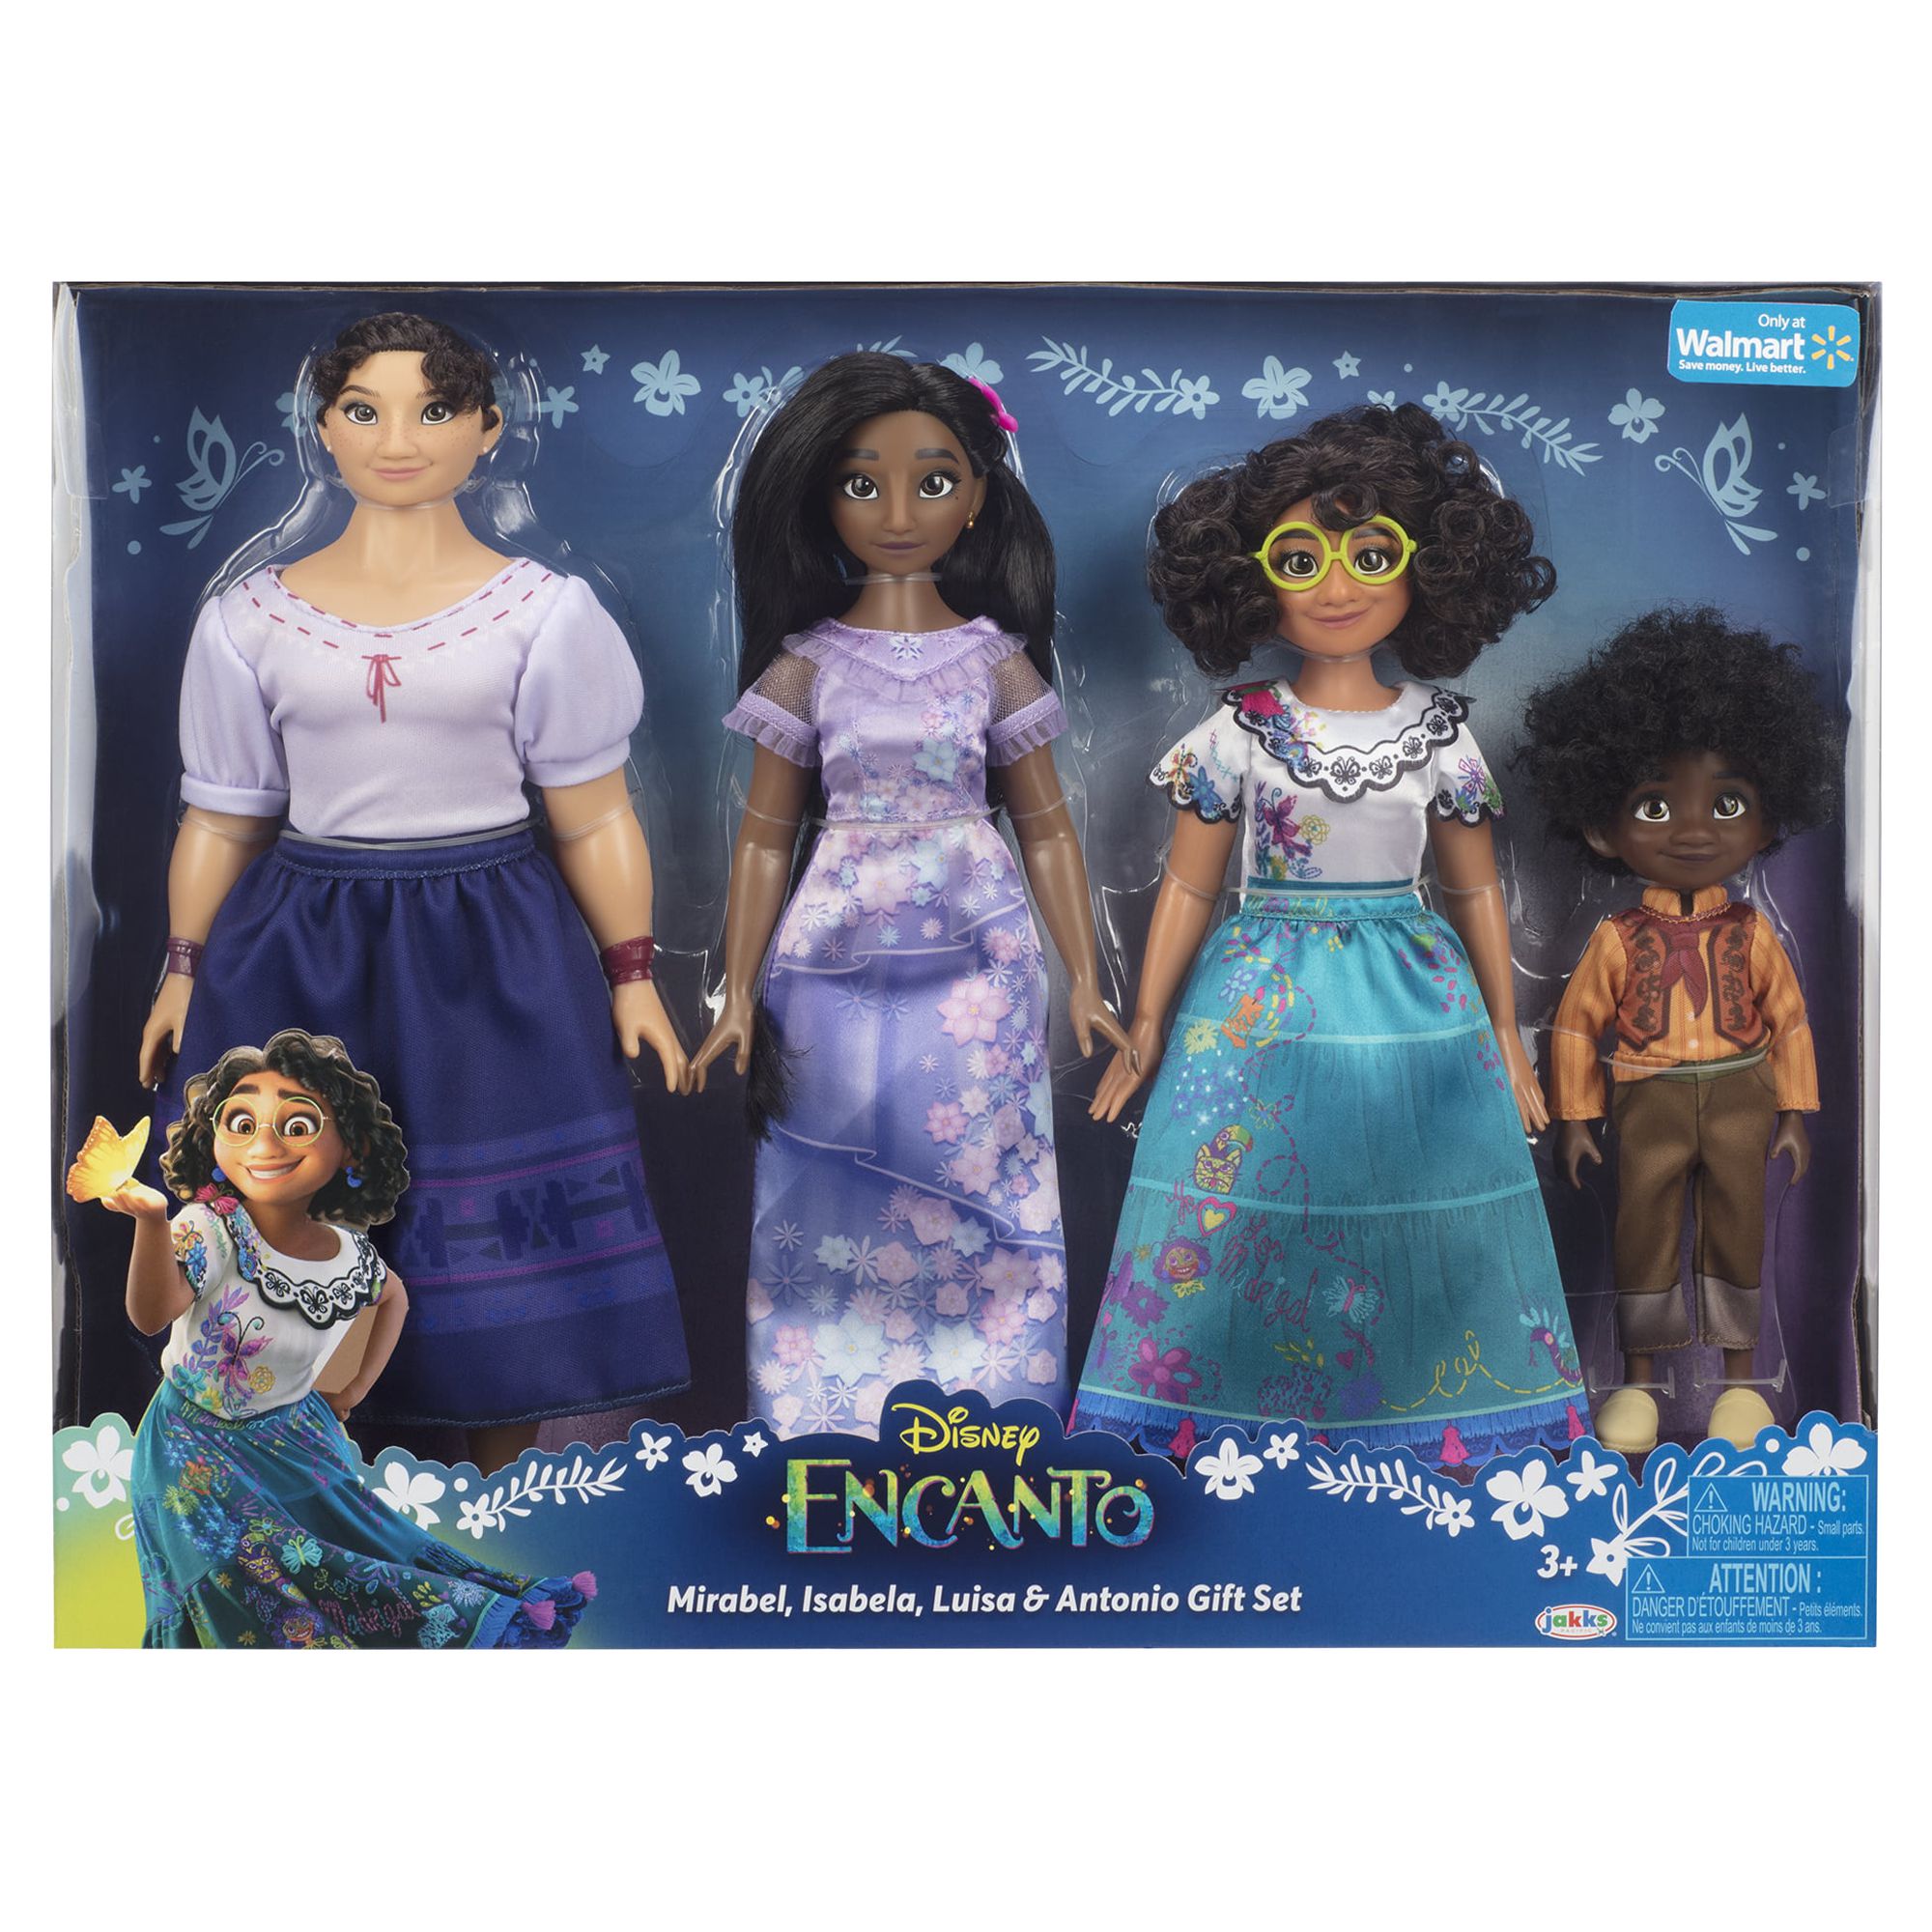 Disney Encanto Mirabel, Isabela, Luisa & Antonio Fashion Doll Gift Set Walmart Exclusive Children Ages 3+ - image 2 of 11